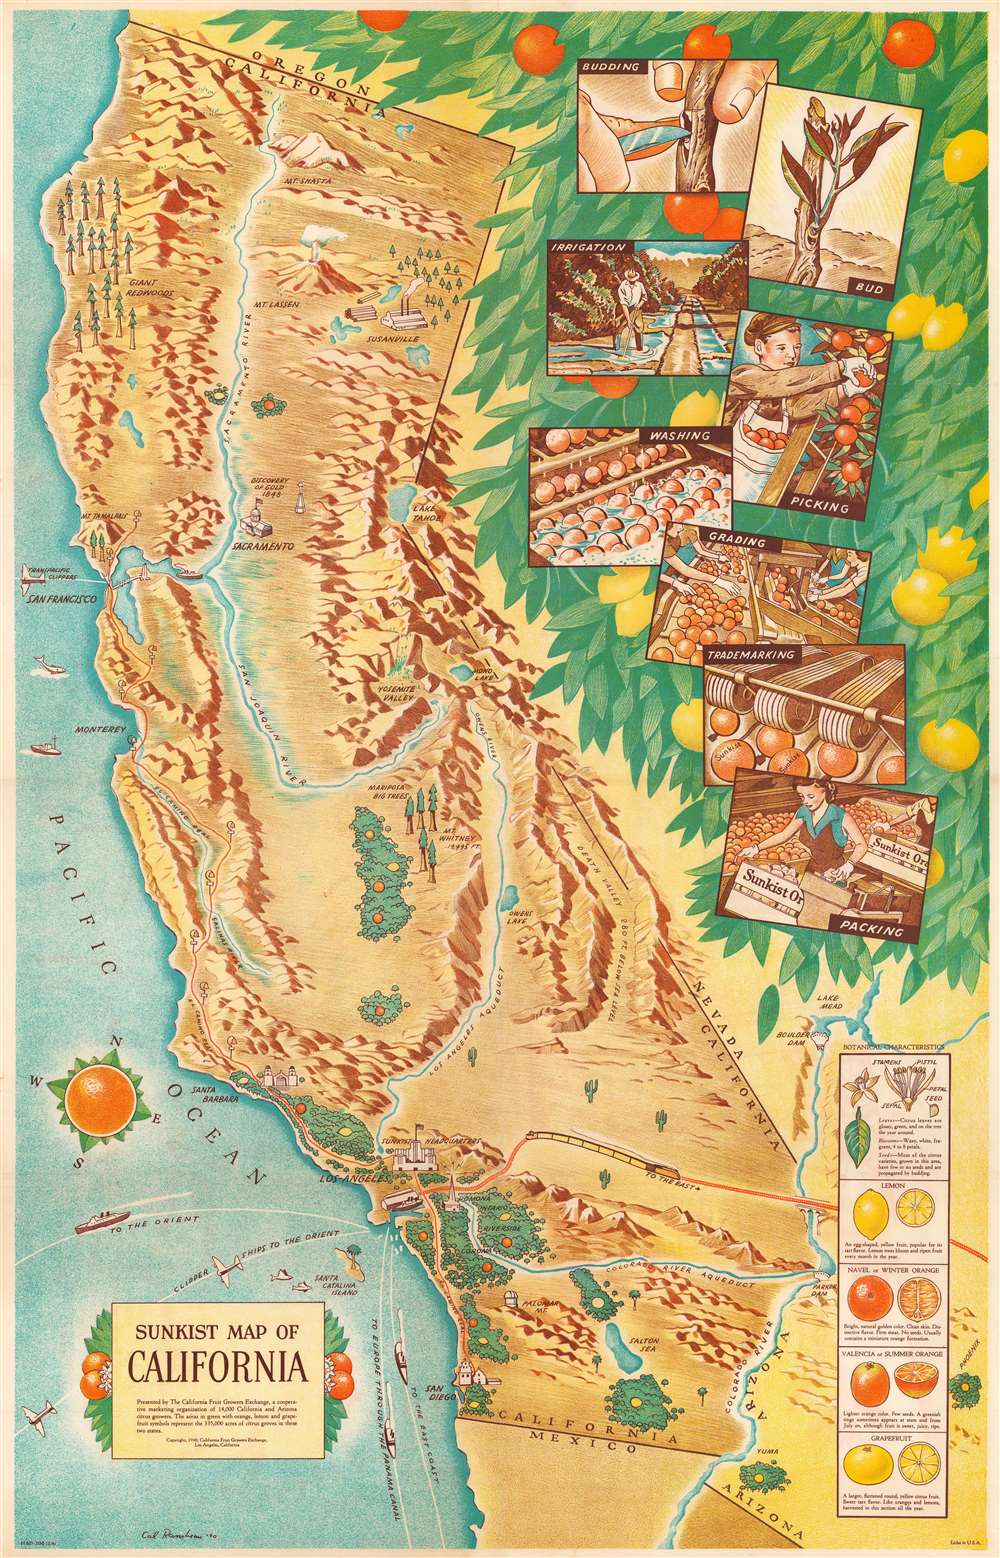 Sunkist Map of California. - Main View